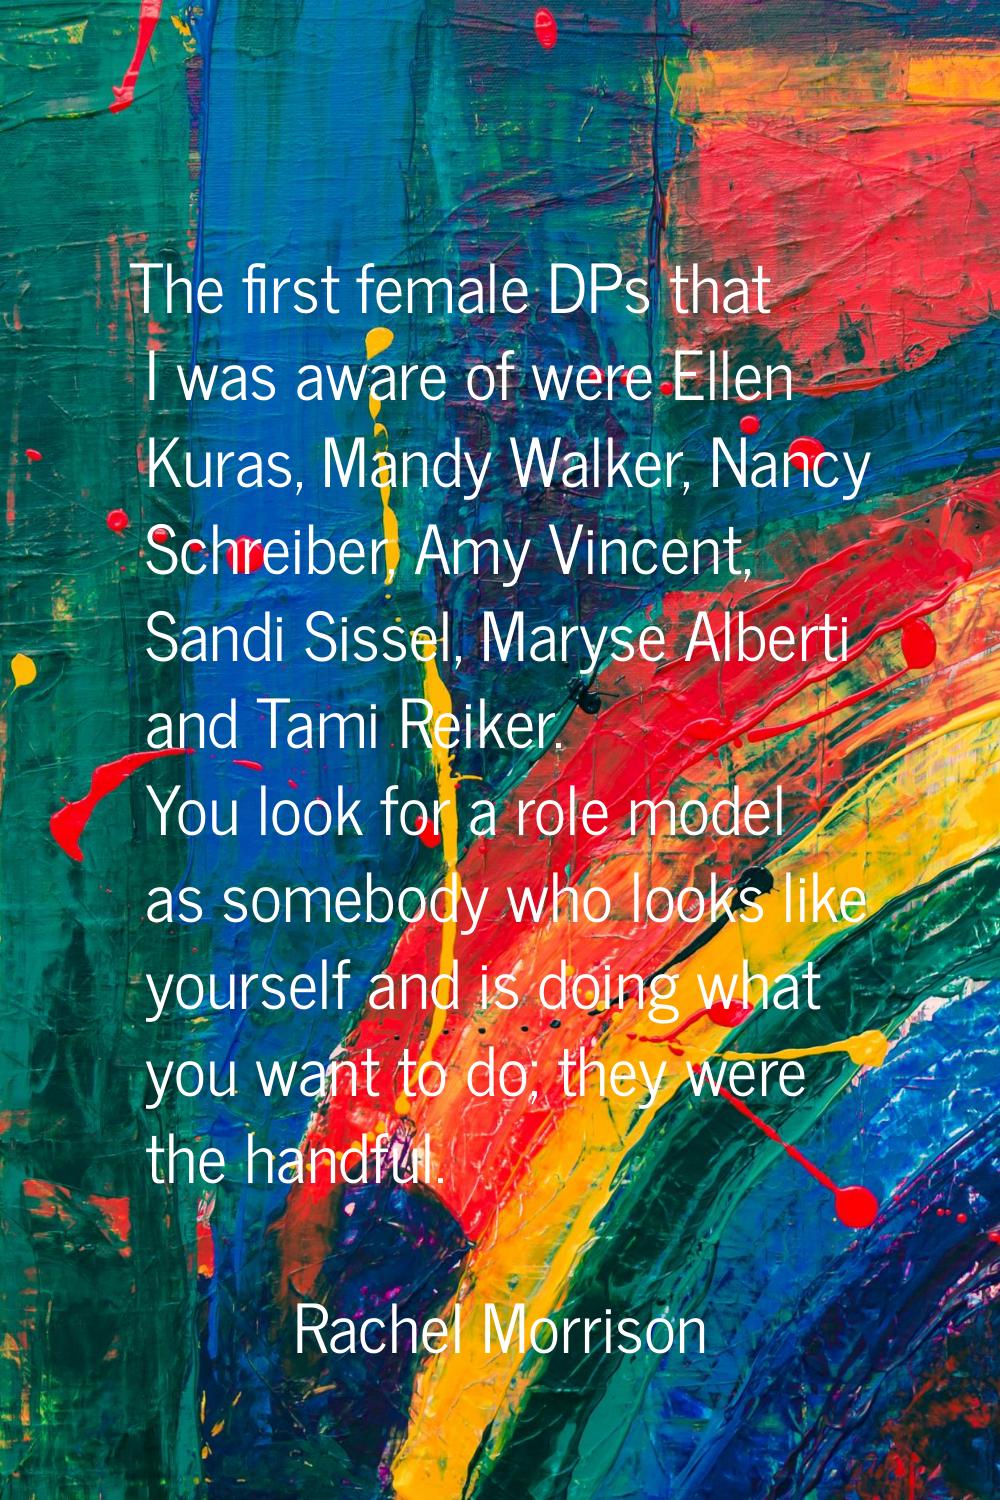 The first female DPs that I was aware of were Ellen Kuras, Mandy Walker, Nancy Schreiber, Amy Vince